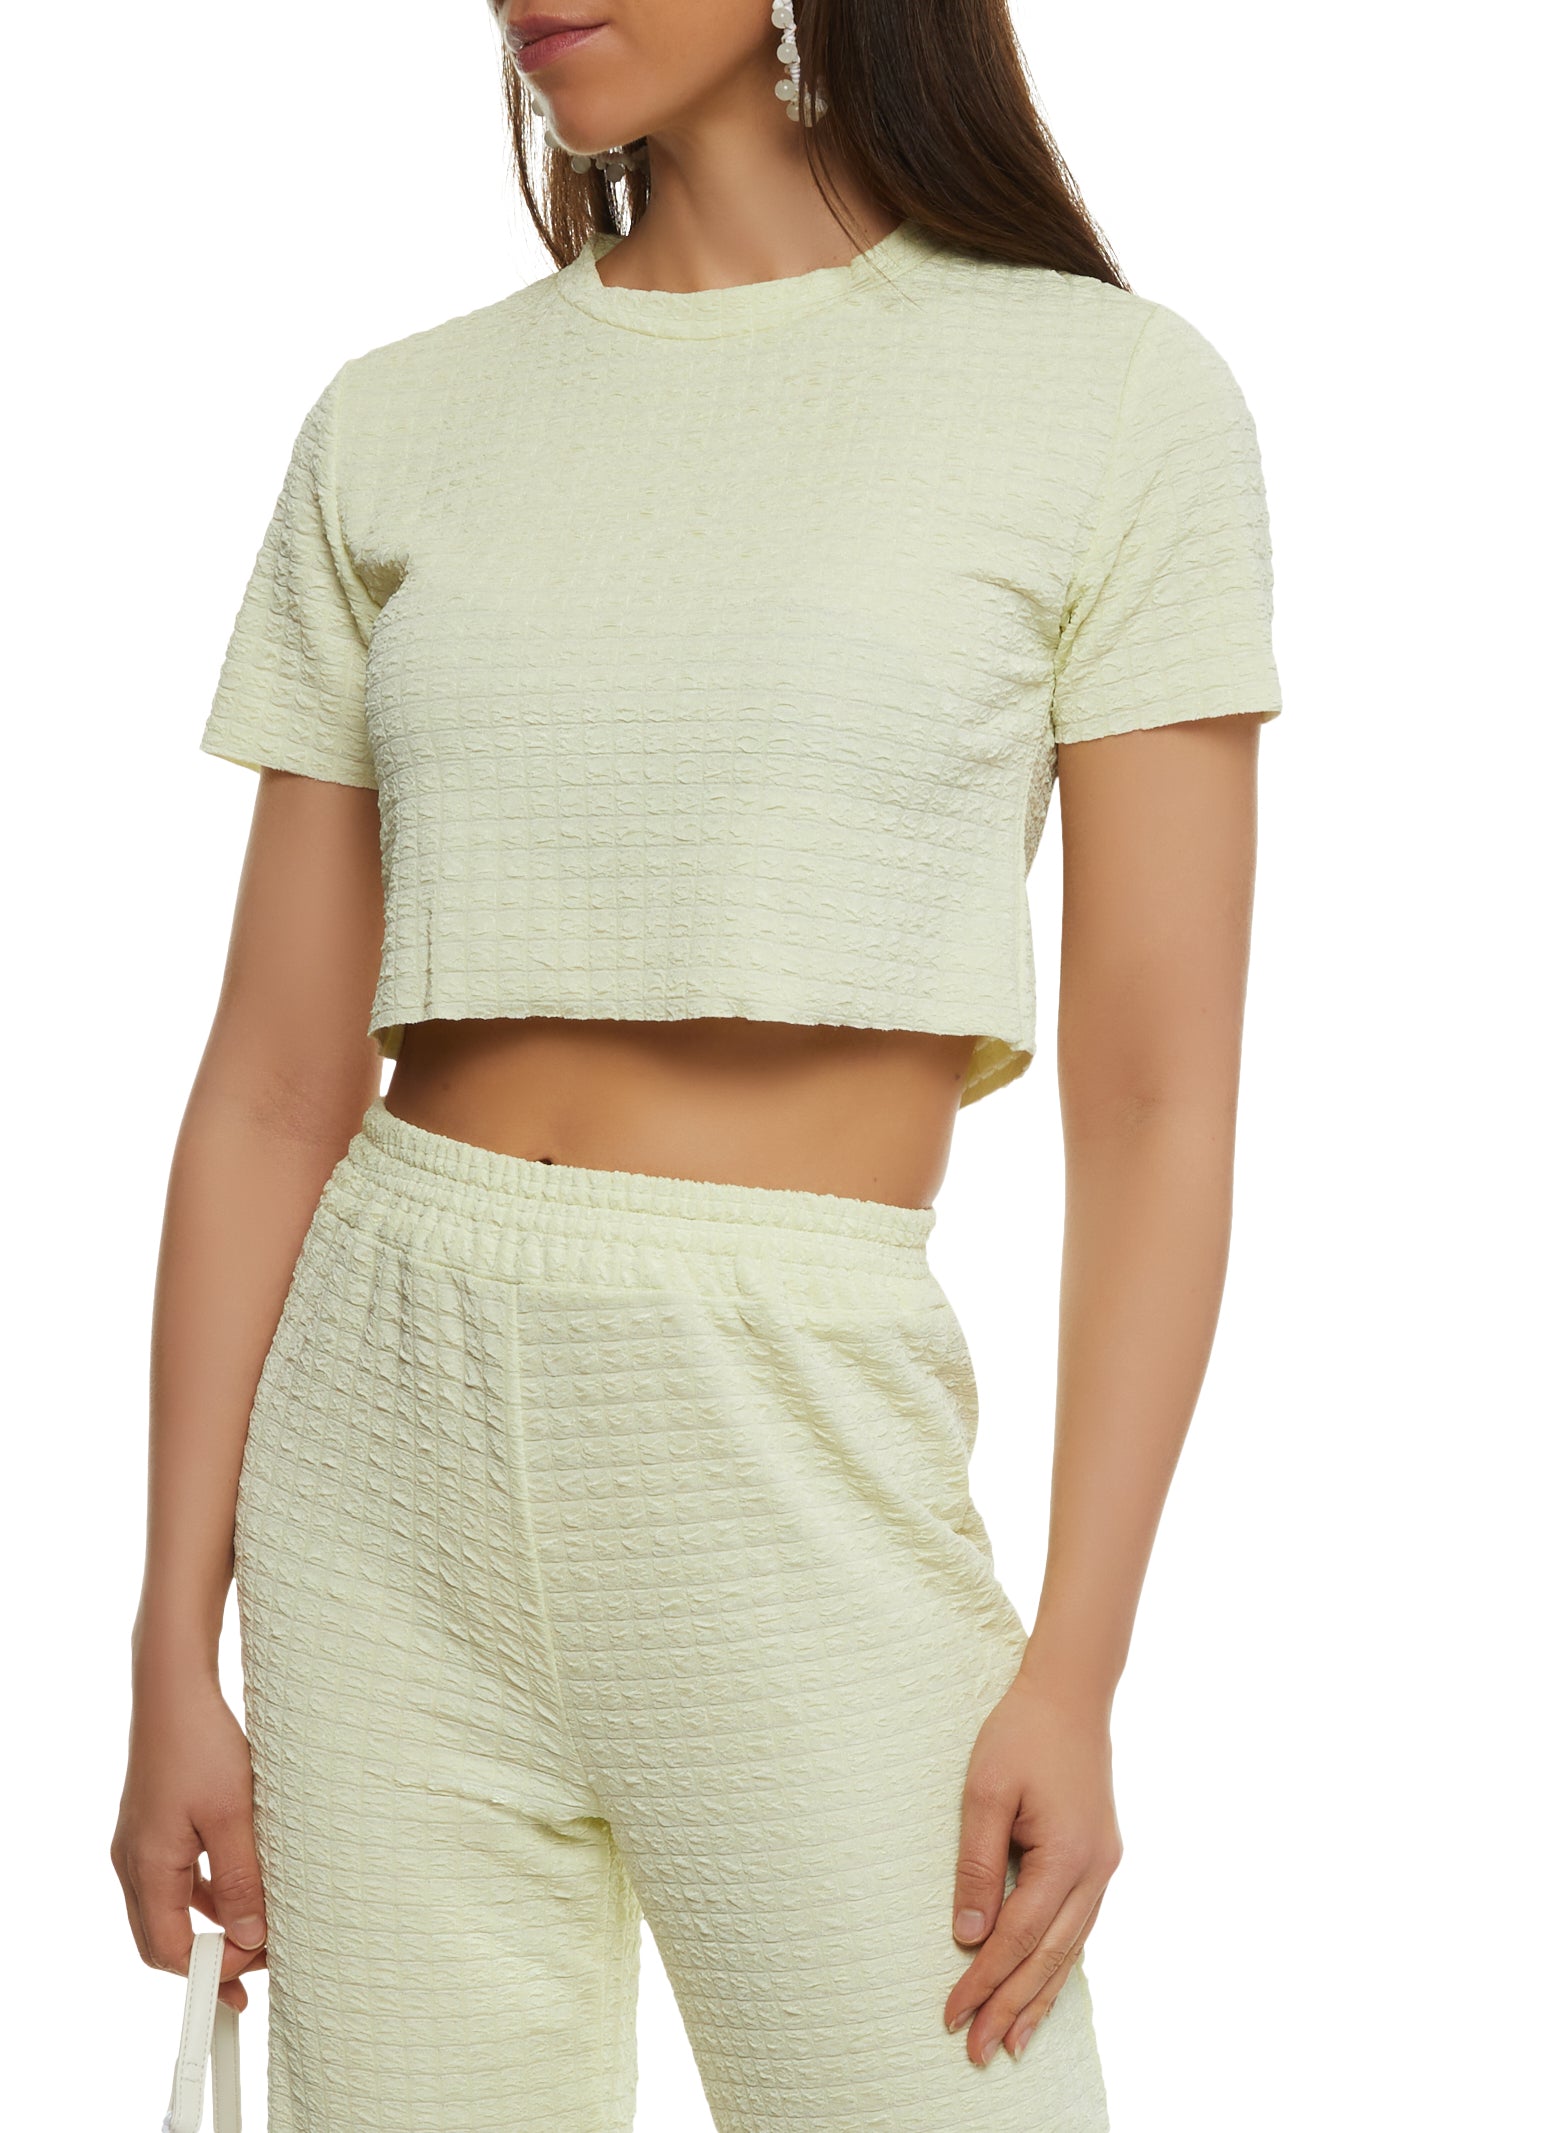 Womens Textured Knit Short Sleeve Crop Top, Yellow, Size M